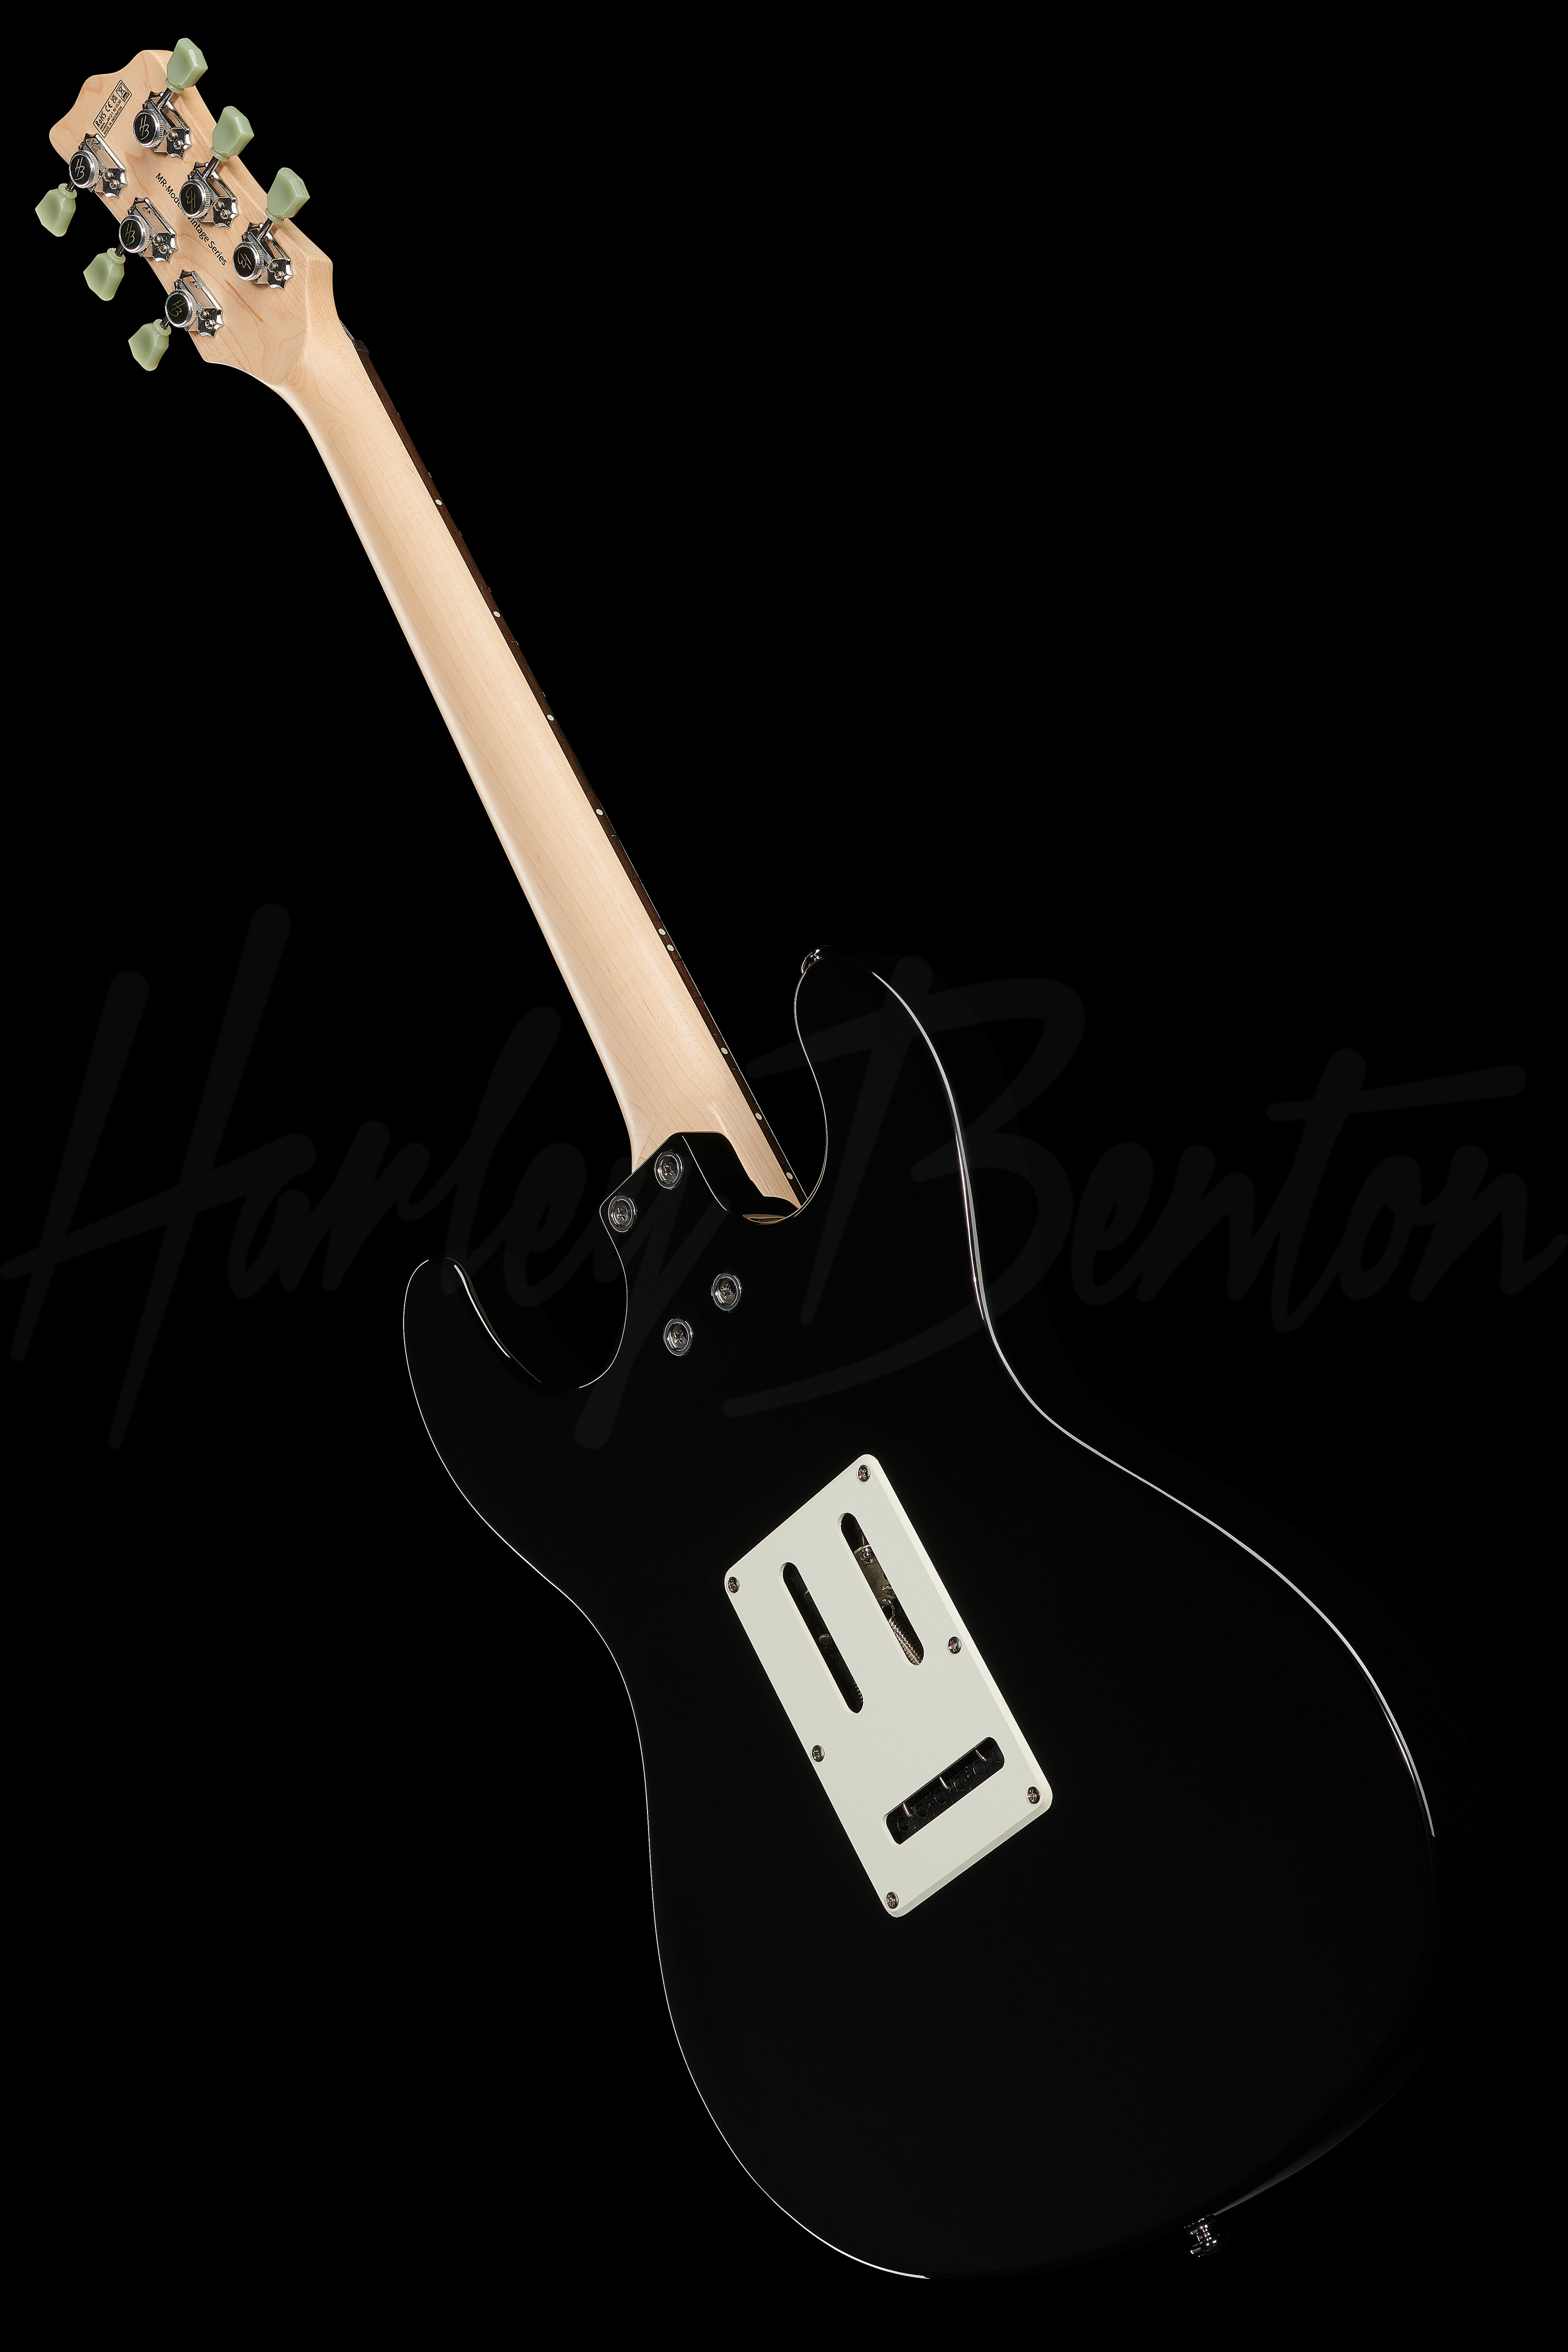 Harley Benton MR-Modern guitar review